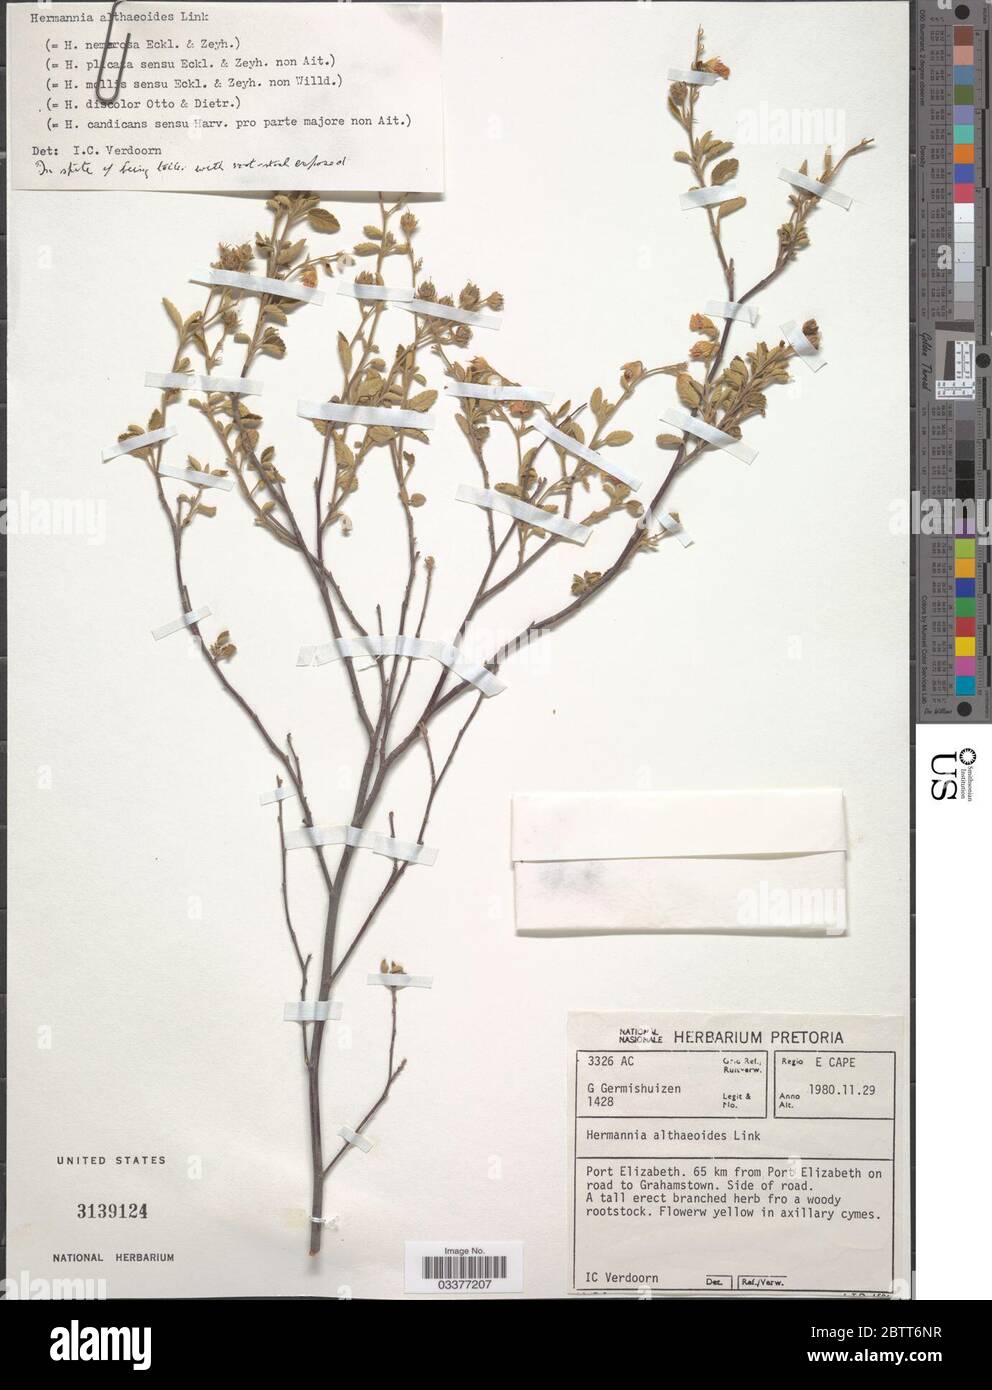 Hermannia althaeoides Link. Stock Photo